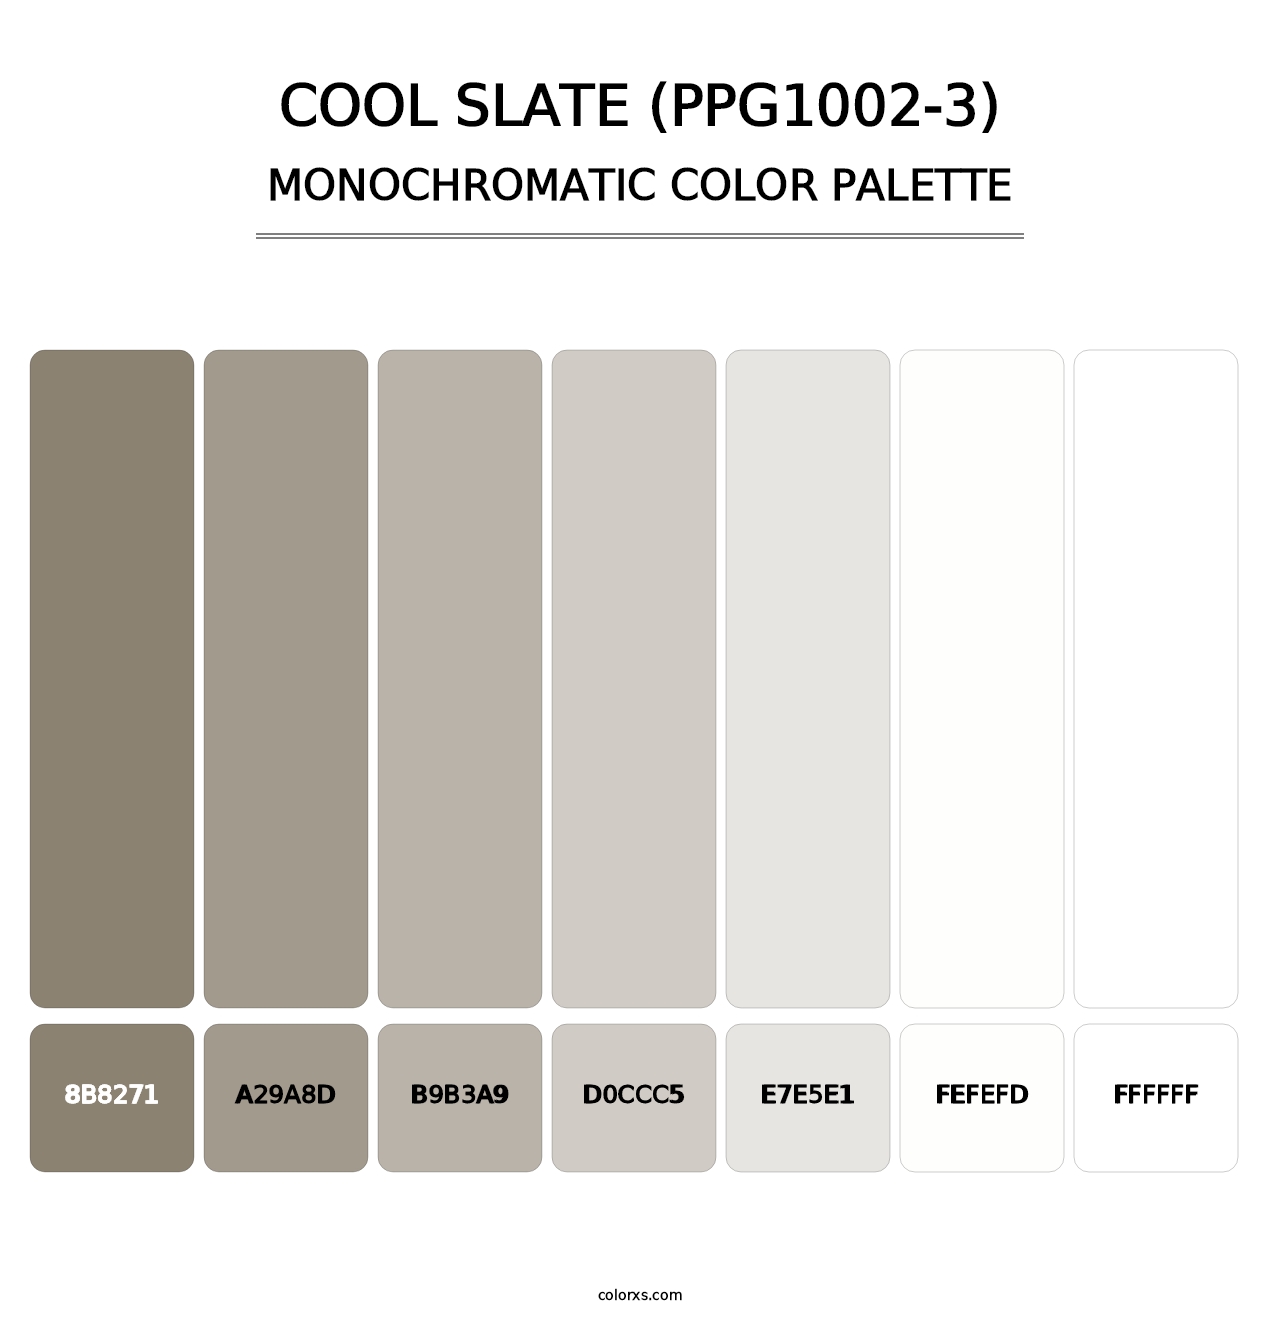 Cool Slate (PPG1002-3) - Monochromatic Color Palette